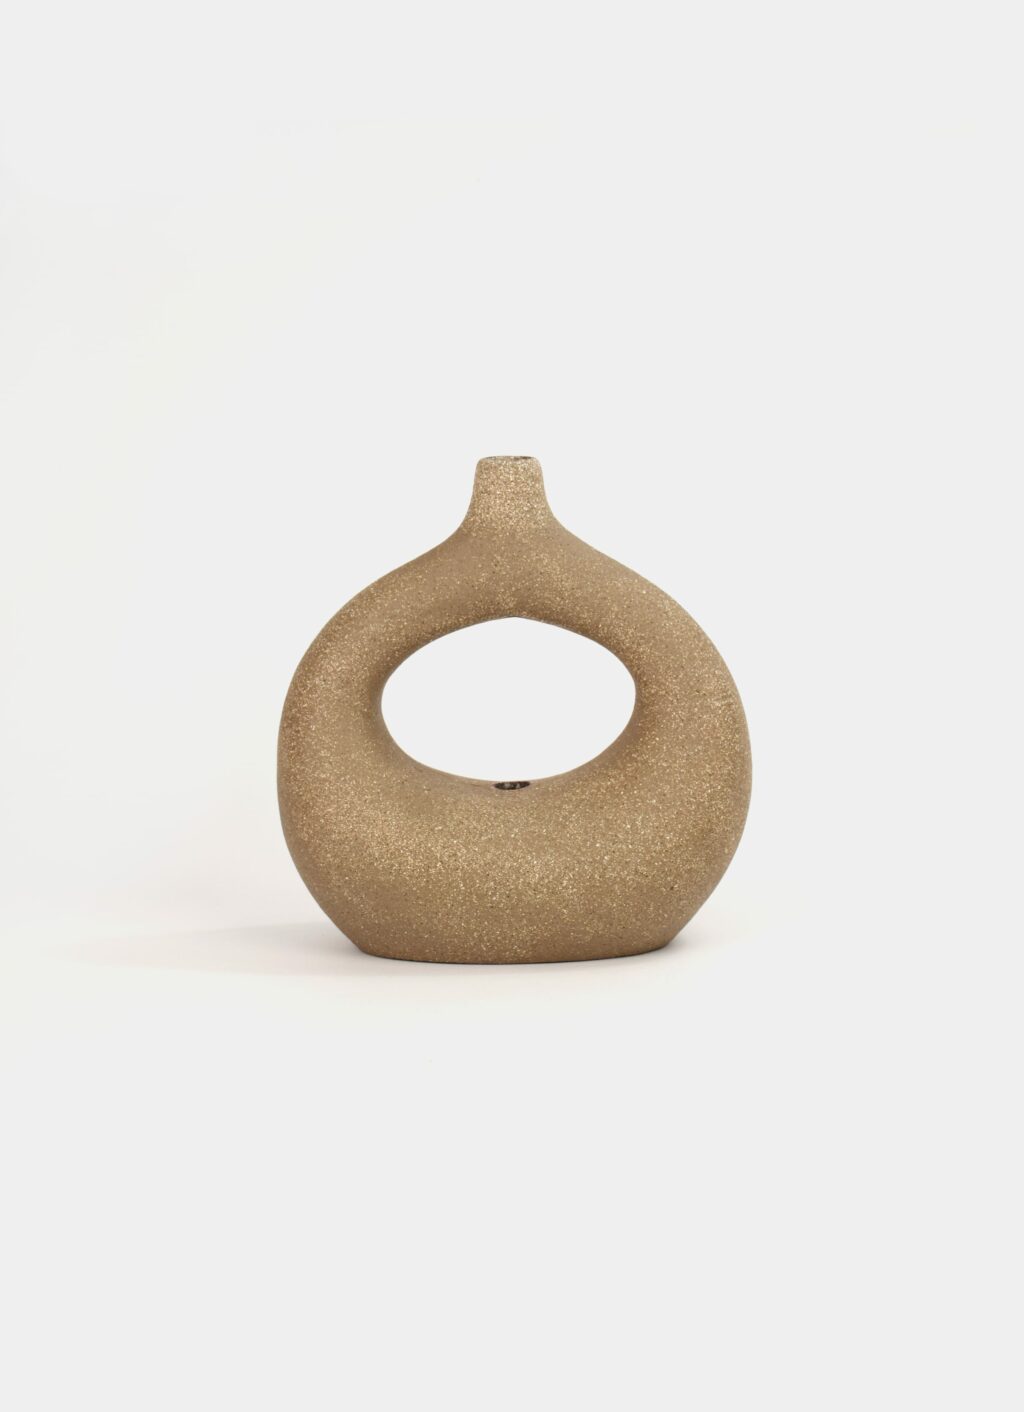 Viv Lee - Handmade stoneware vessel - Limited edition - Holo05 - medium buff